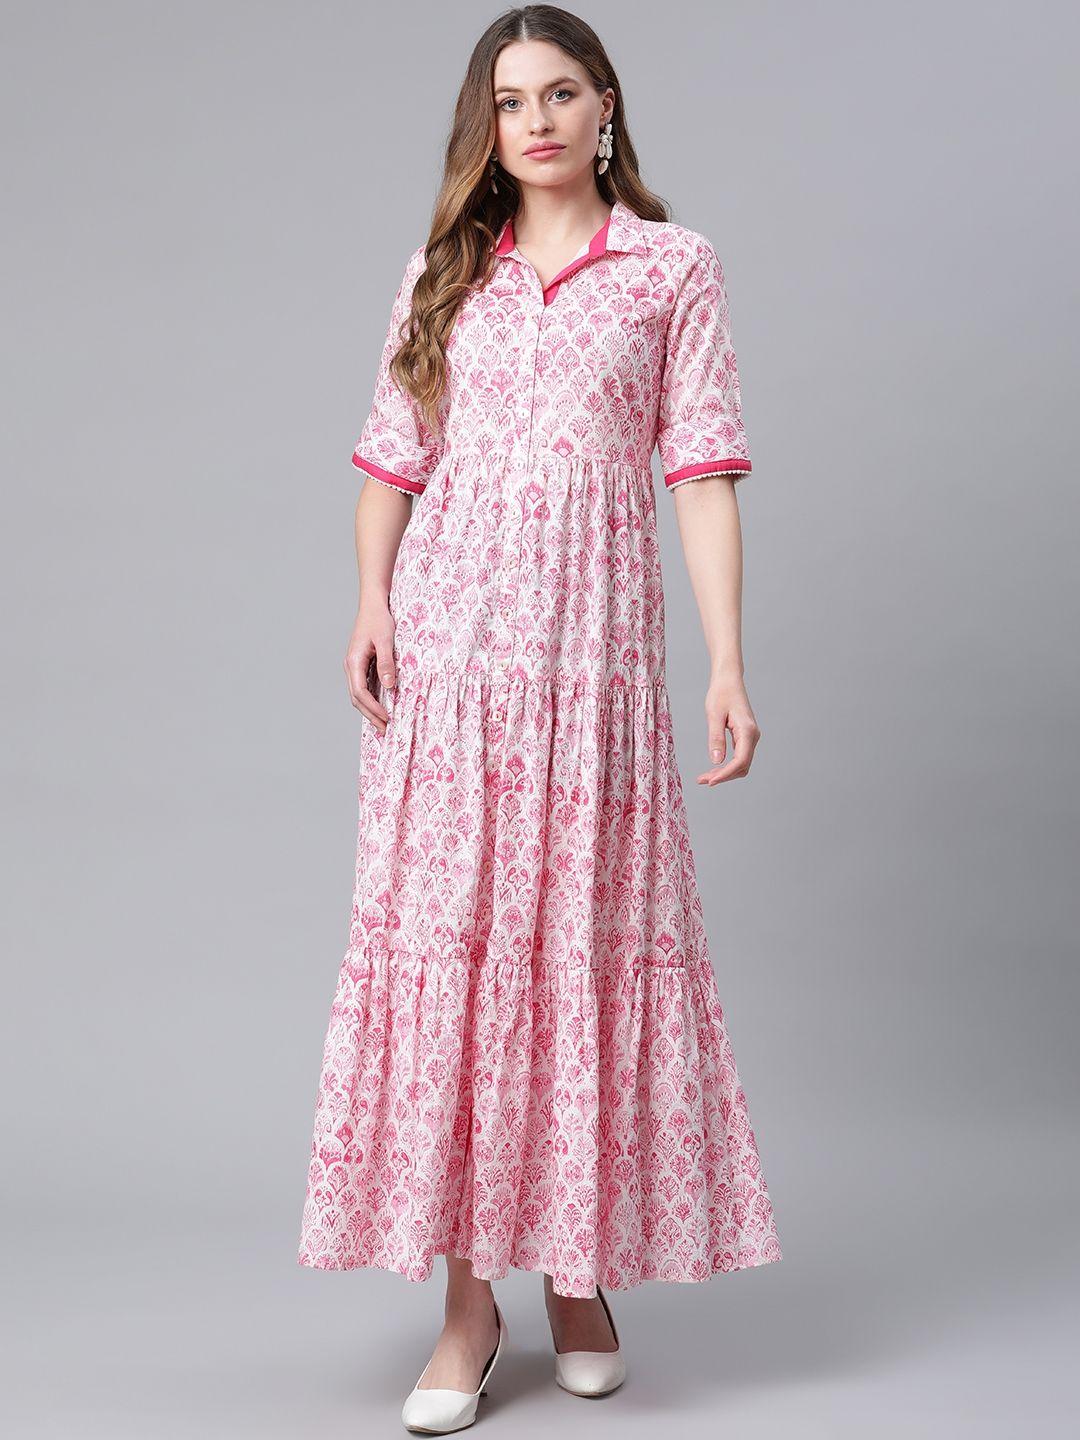 rangriti women pink floral ethnic a-line maxi dress